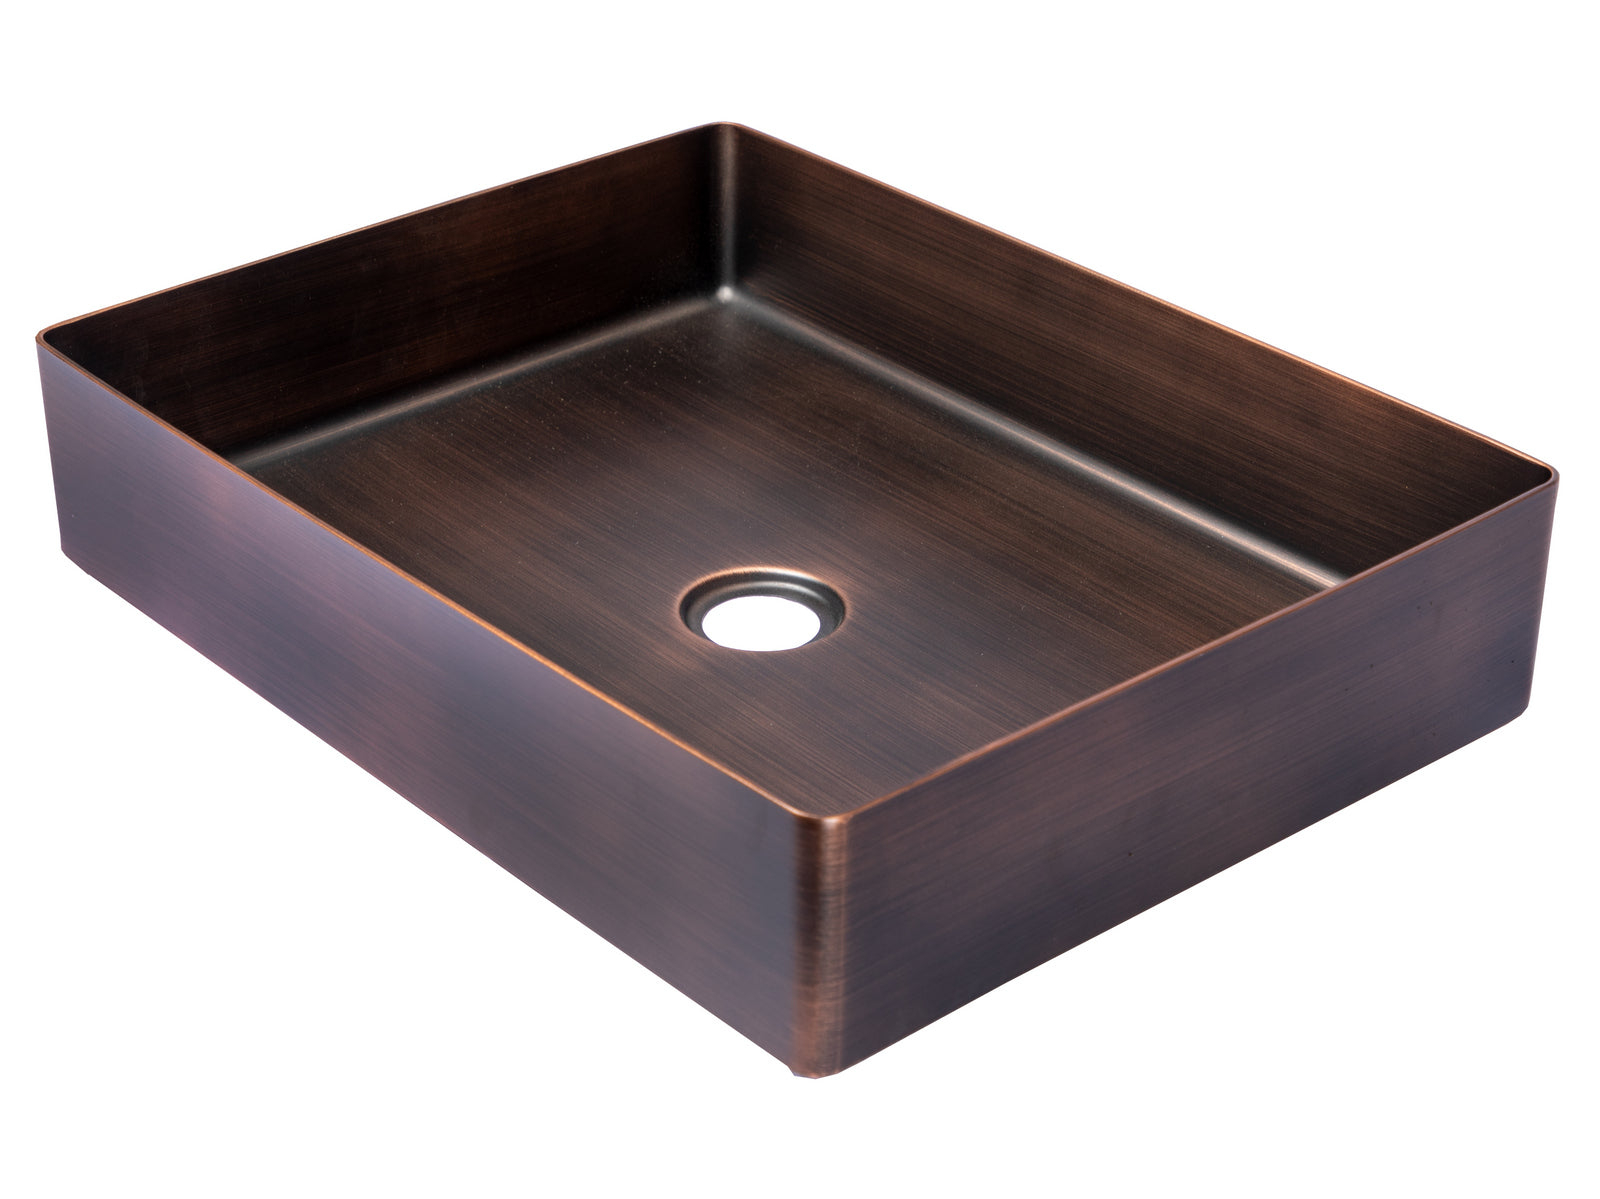 Rectangular 19 x 14 1/2" Stainless Steel Bathroom Vessel Sink with Drain in Bronze